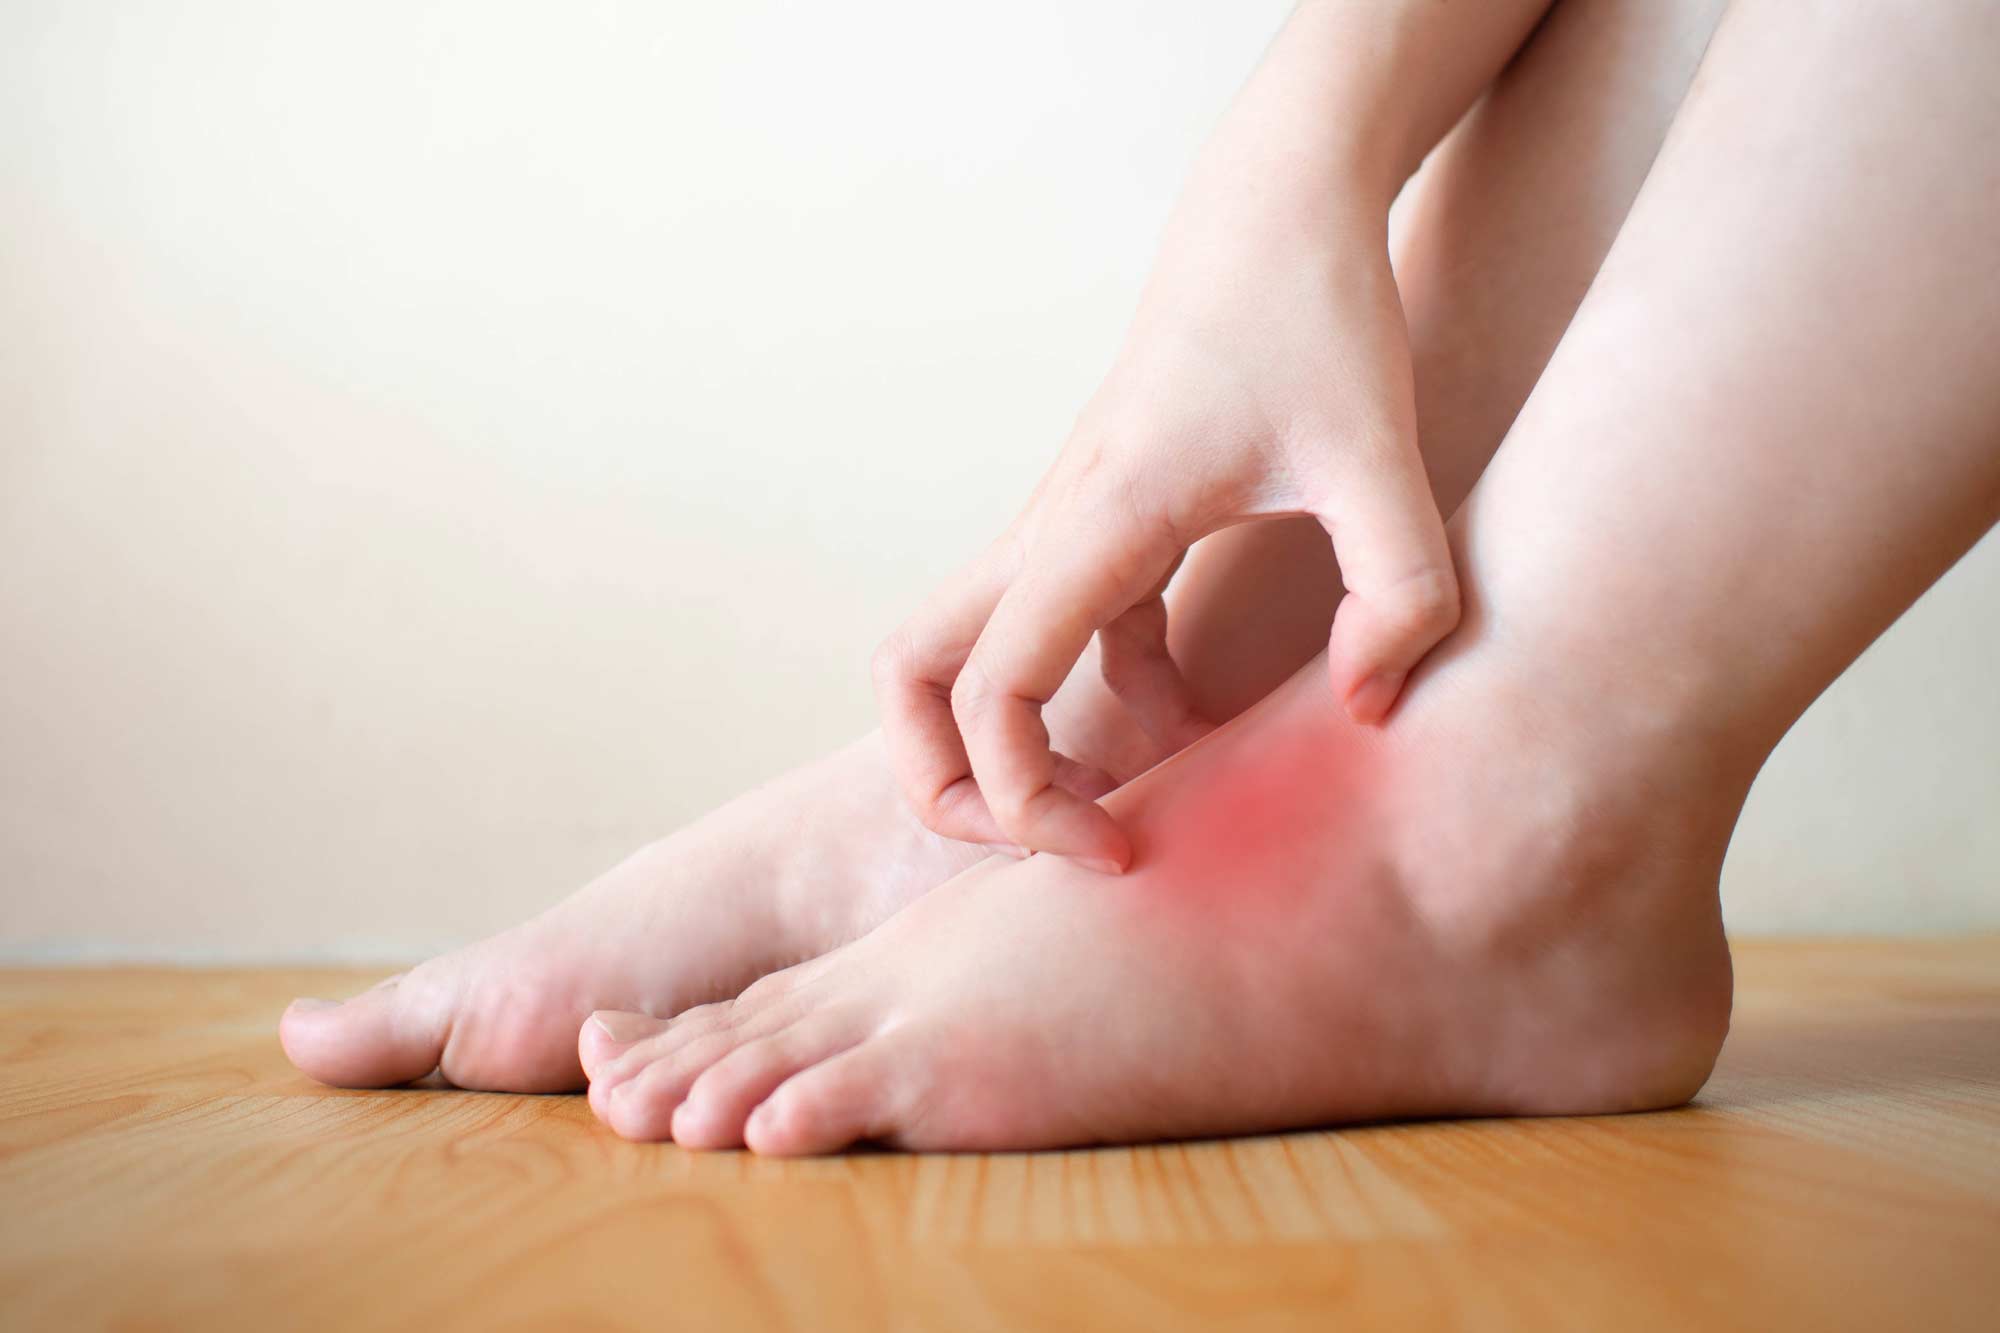 Diabetic Foot Rash Symptoms And Treatment Fresno And Visalia Podiatry